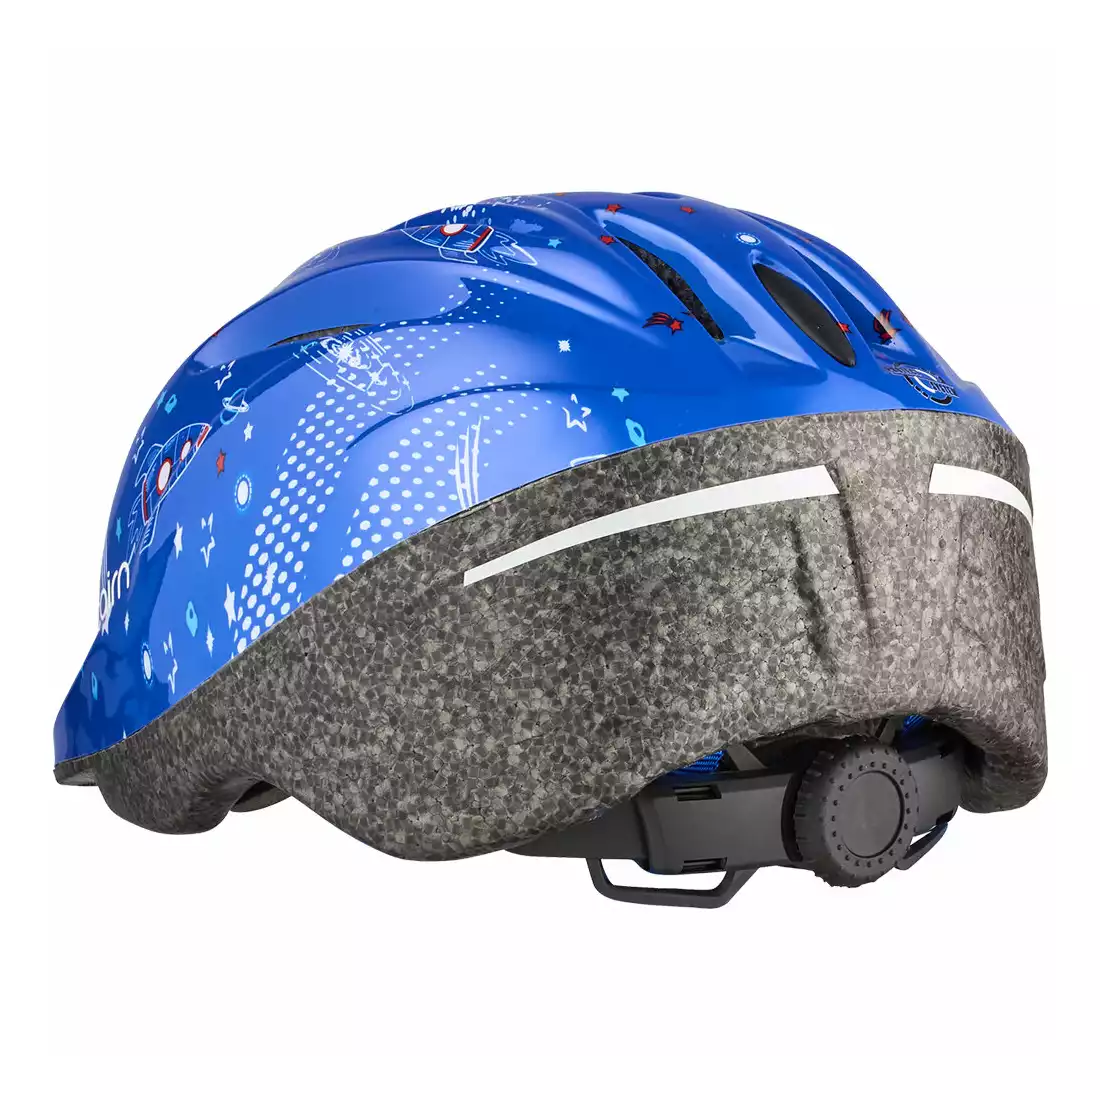 CAIRN SUNNY Children's bicycle helmet, blue